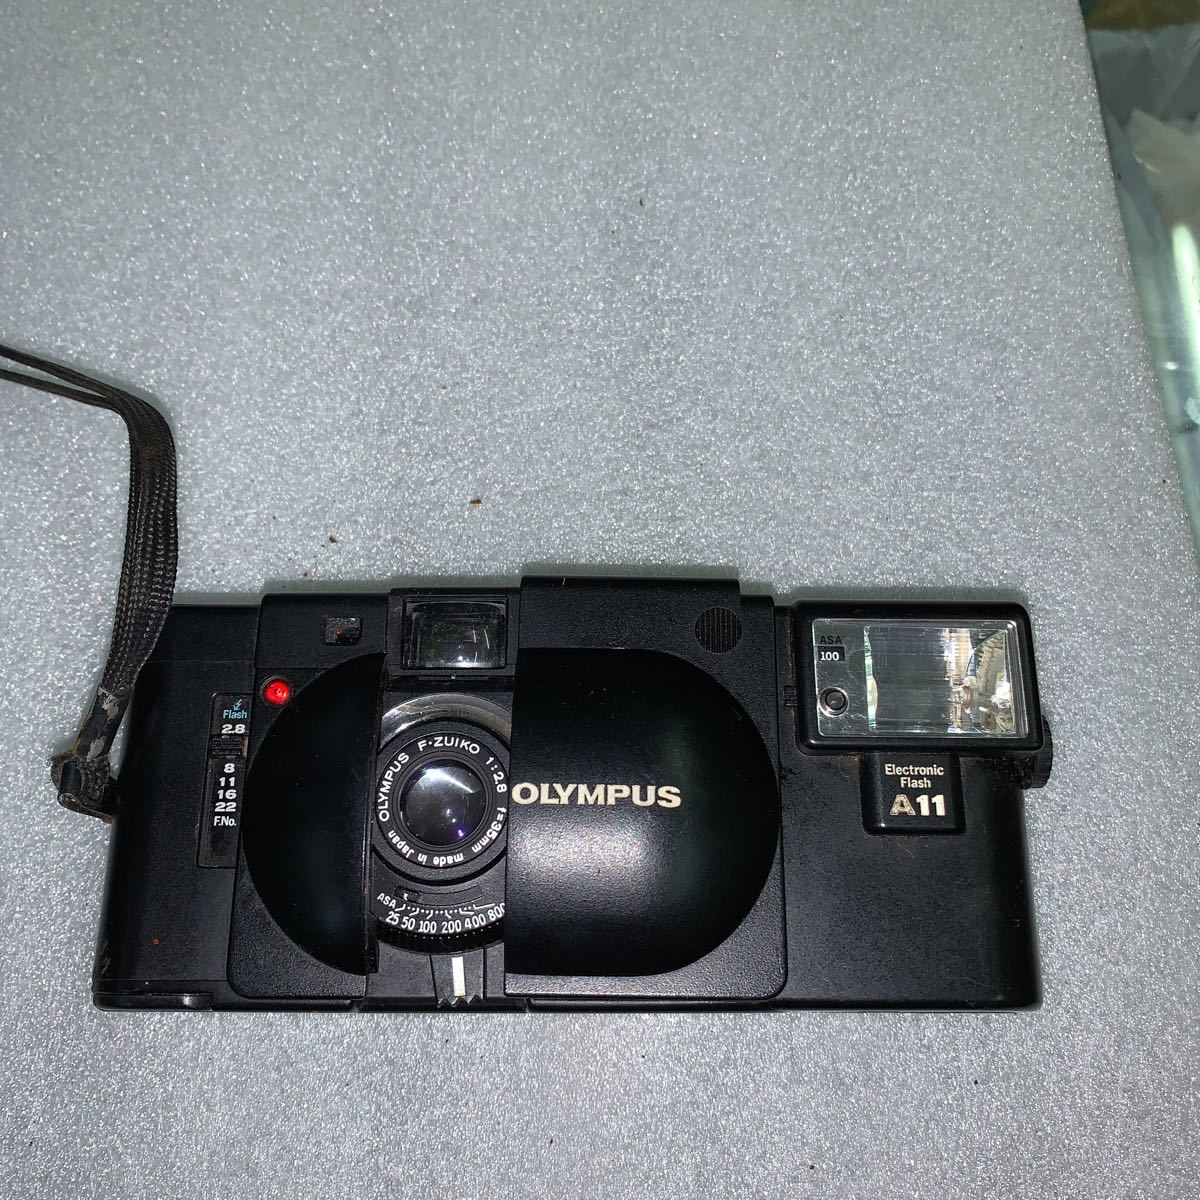 [A12]OLYMPUS XA F*ZUIKO 1:2.8 f=35mm Electronic Flash A11 Olympus compact camera film camera [ not yet verification ][ mail 60 size ]